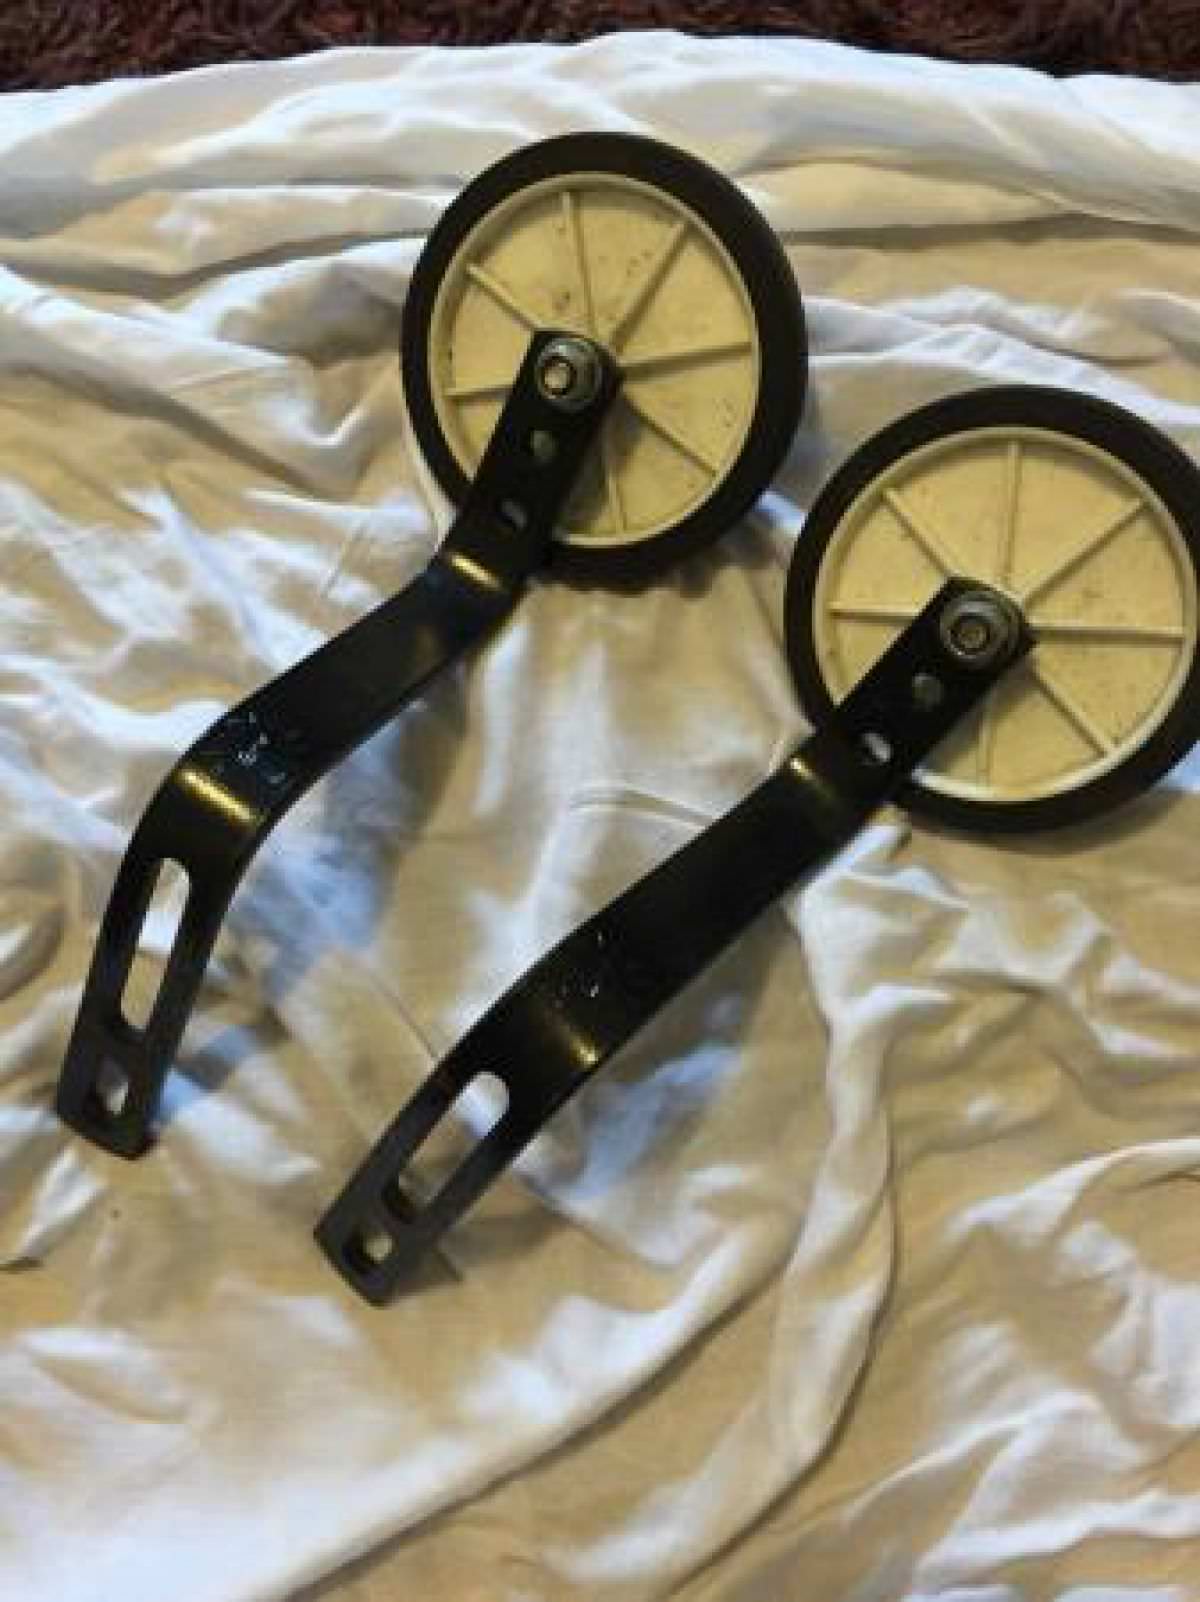 Pair of bicycle stabilisers